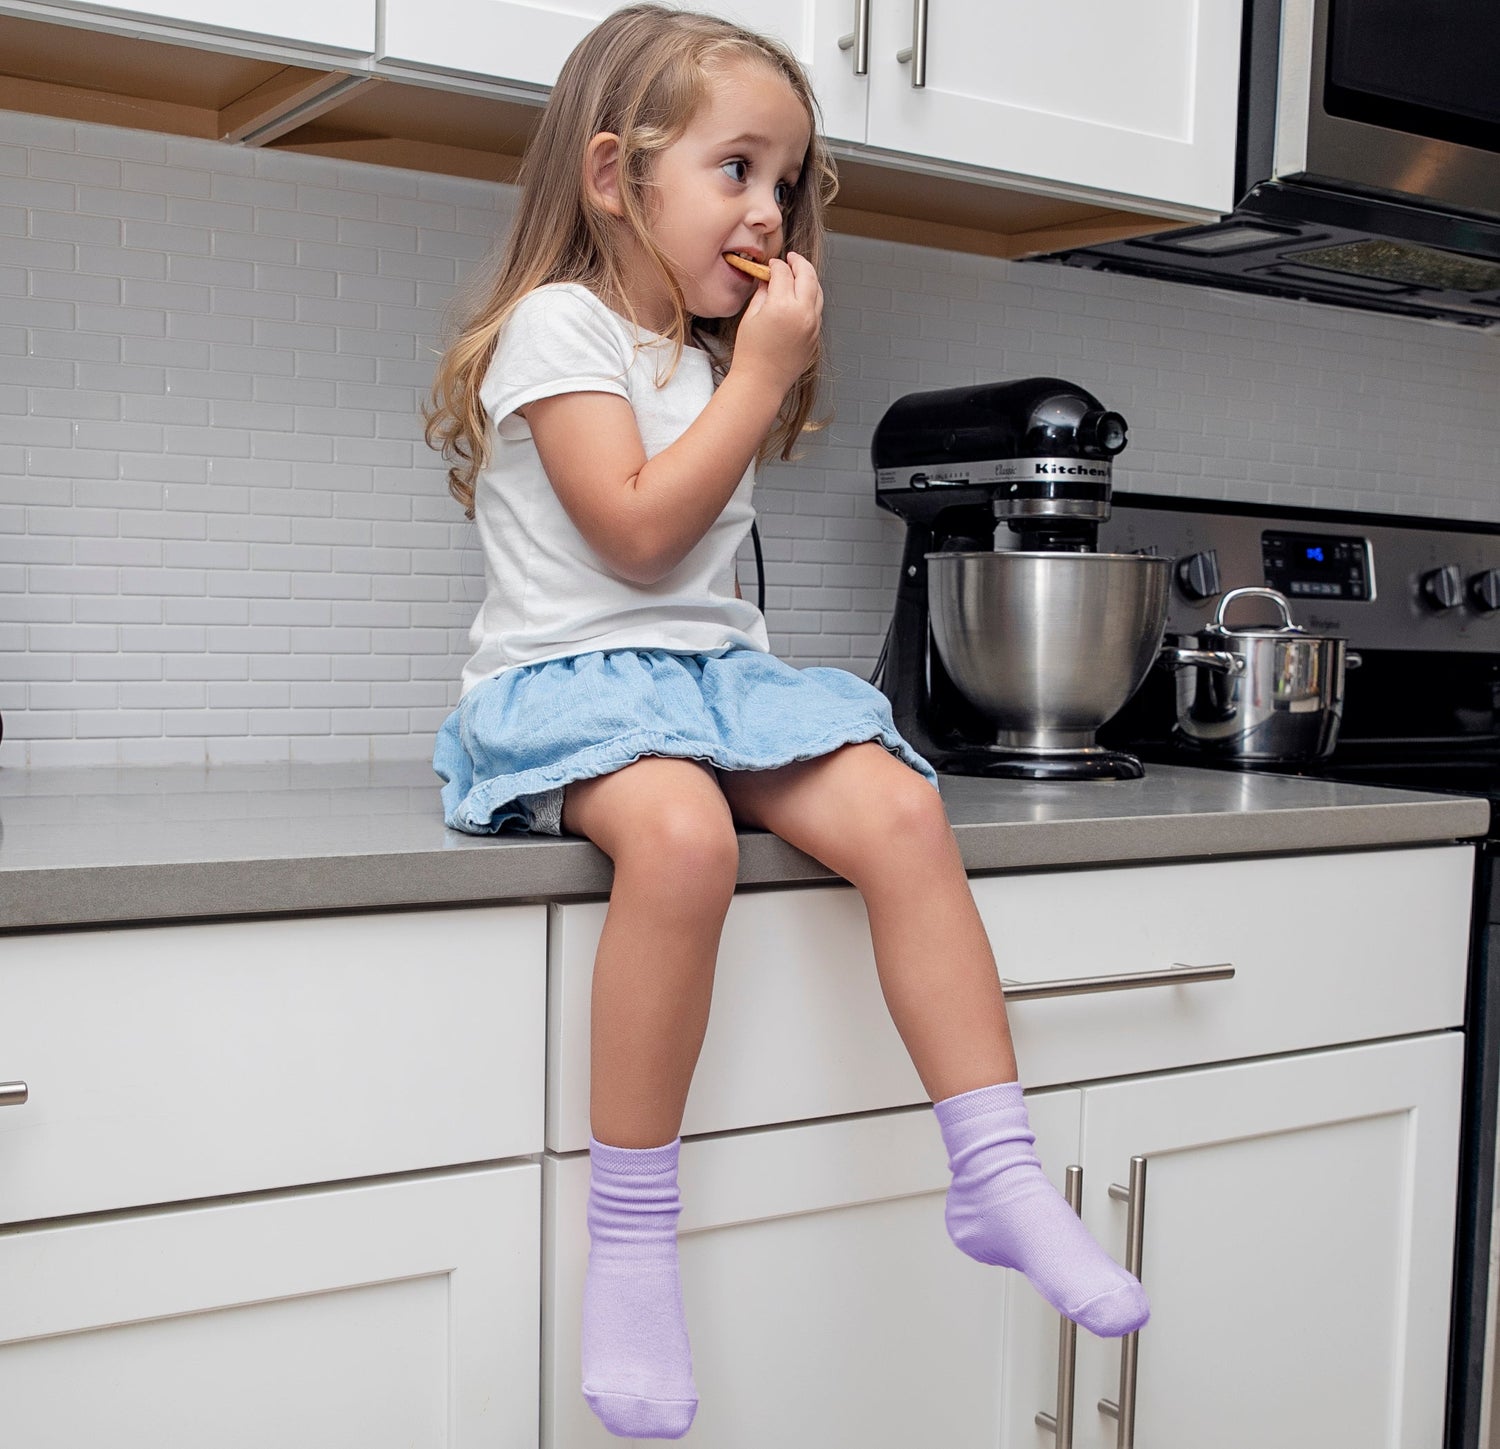 Gripjoy Socks Toddlers & Kids Light Grey Grip Socks - 4 pairs